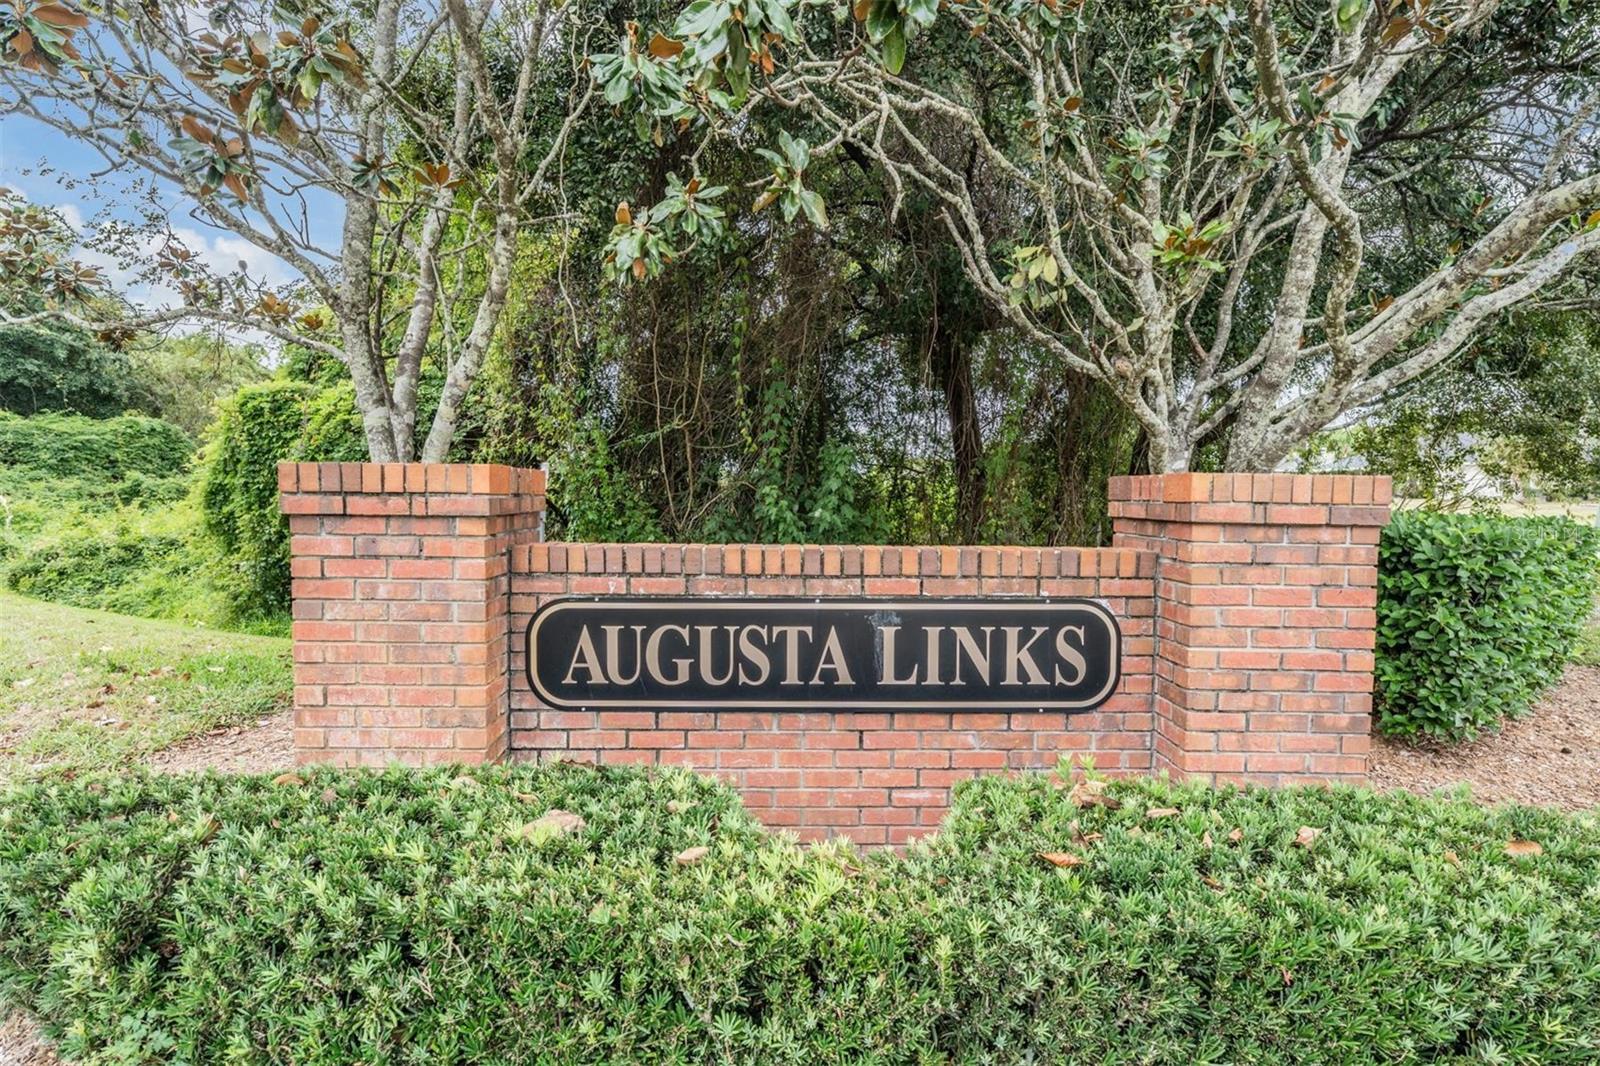 The Augusta Links Neighborhood is quietly nestled within Lake Bernadette